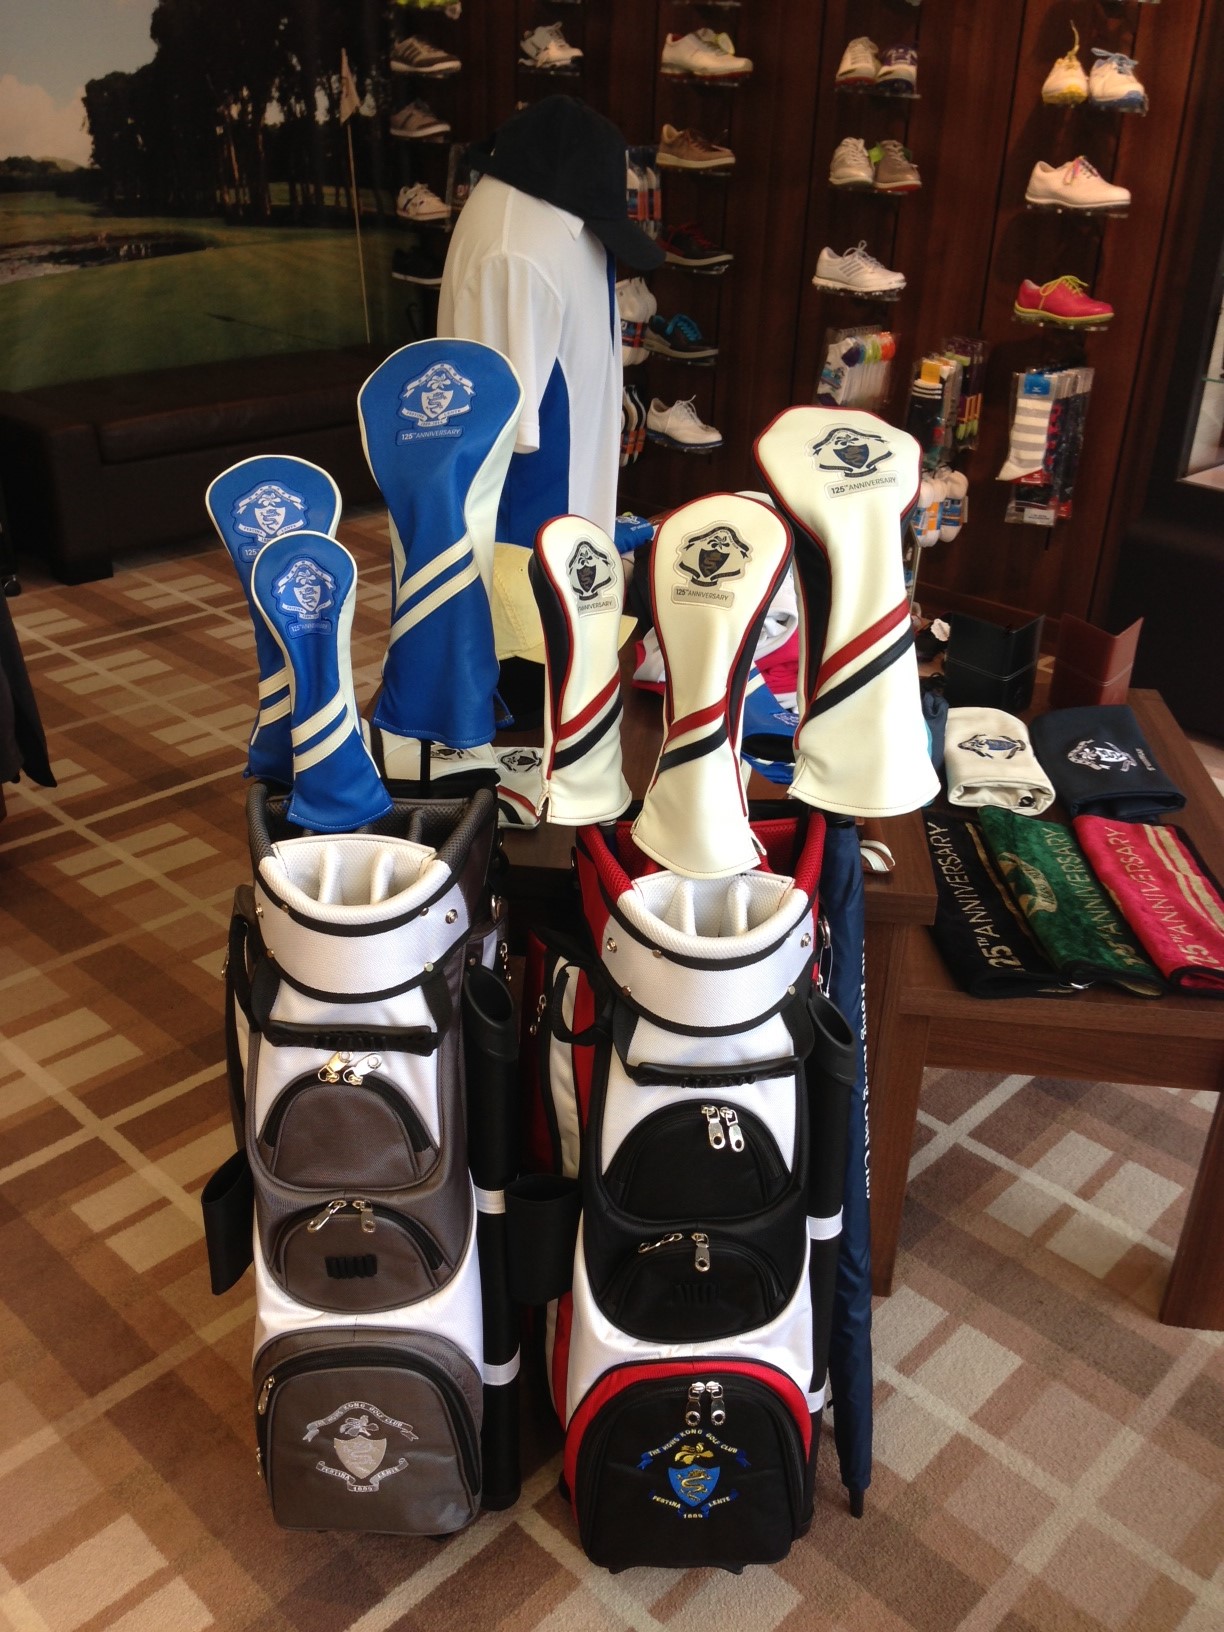 HKGC 125th Golf Bag and Headcovers display.JPG